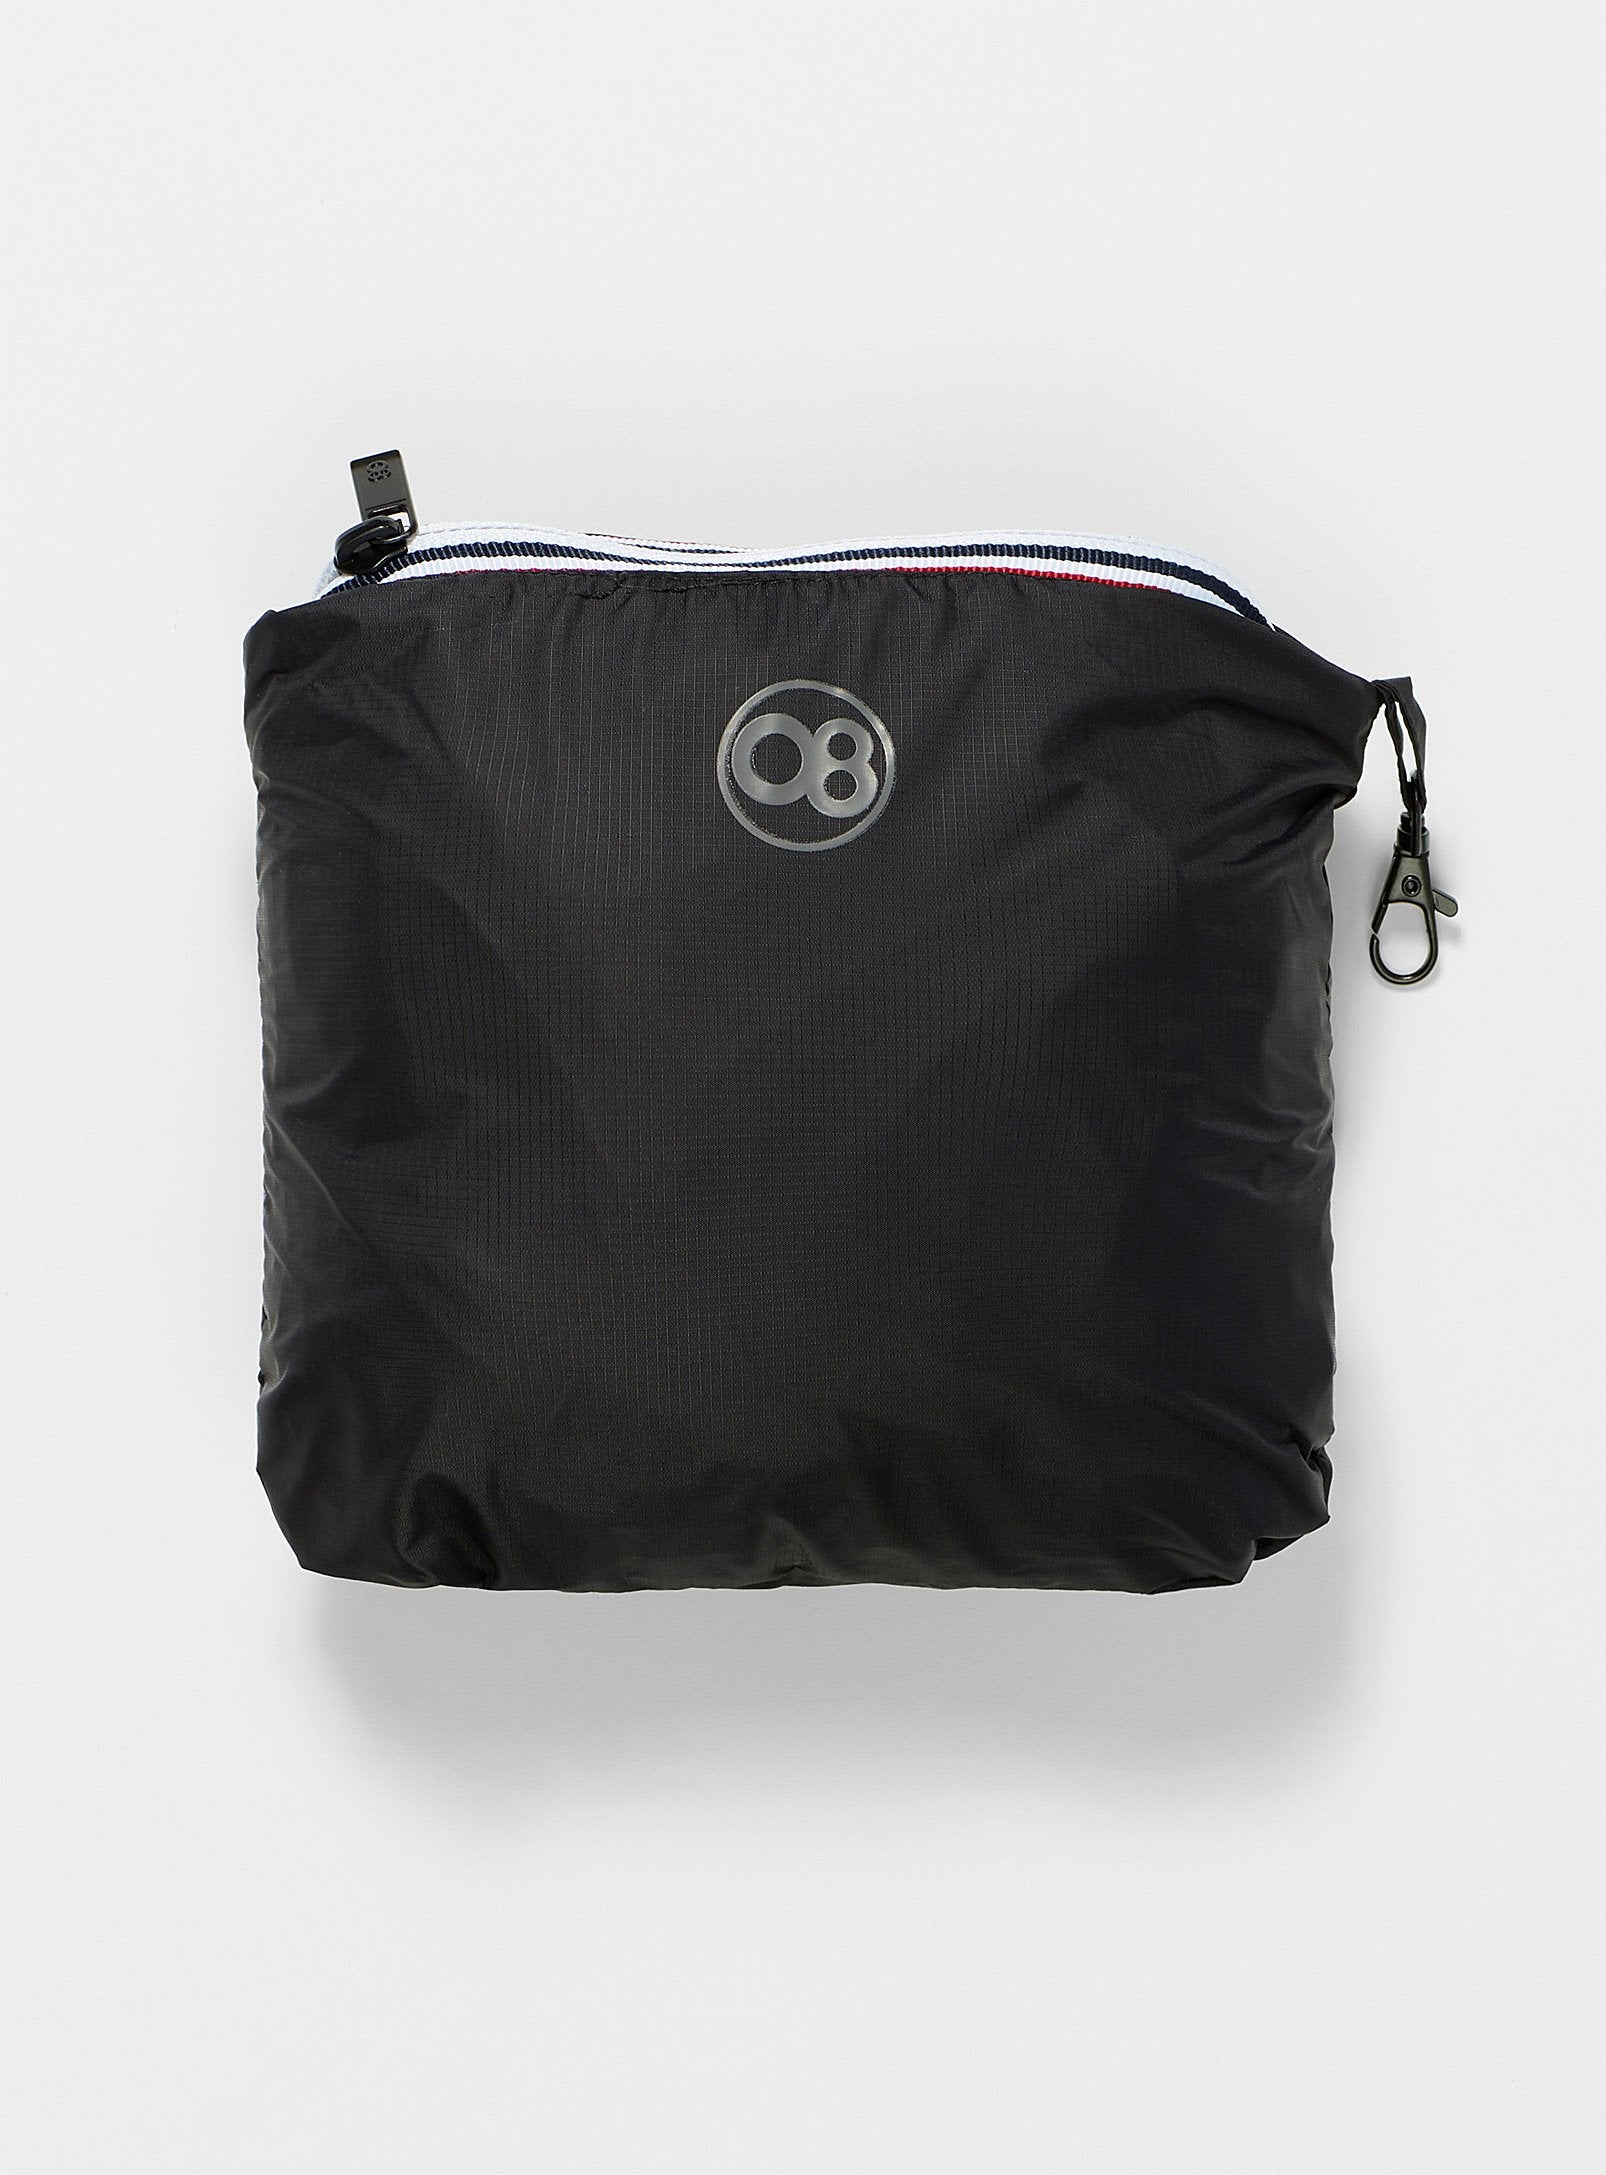 Picture of a Men's Quarter Zip Black Waterproof Rain Jacket storage bag in black